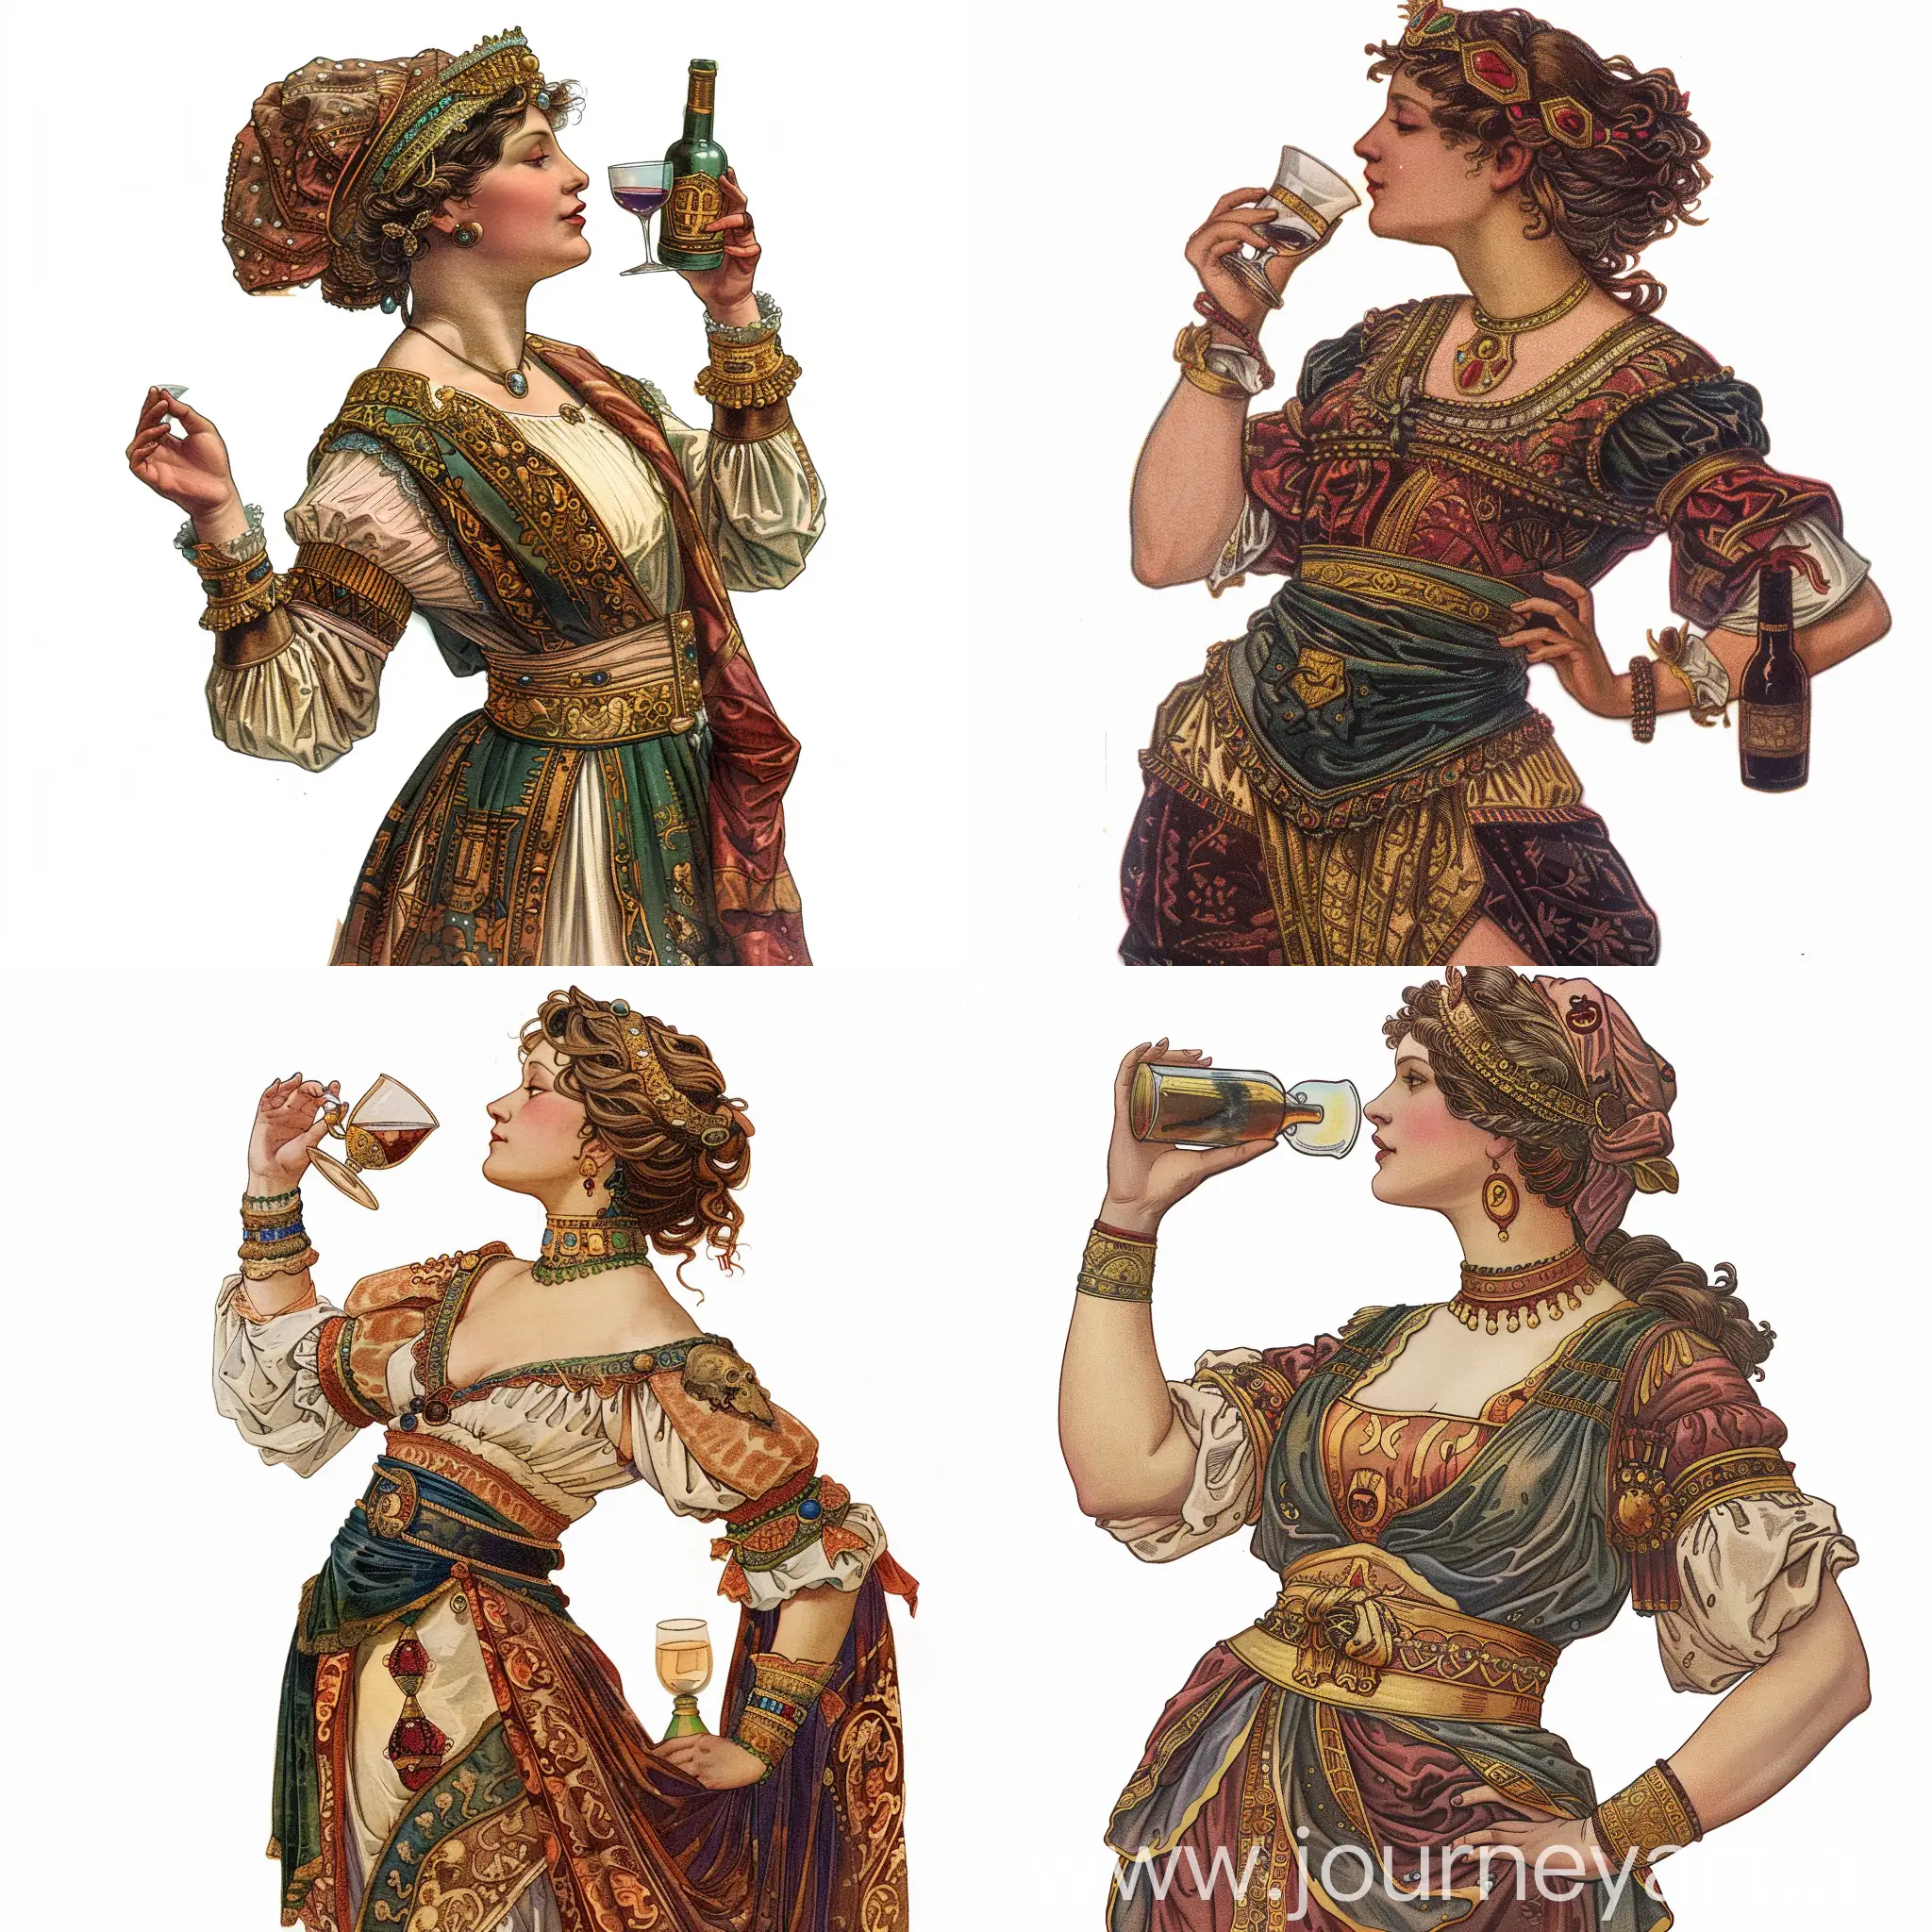 Italian-Queen-Drinking-Wine-in-Rich-Attire-Arthur-Wrexham-Style-Illustration